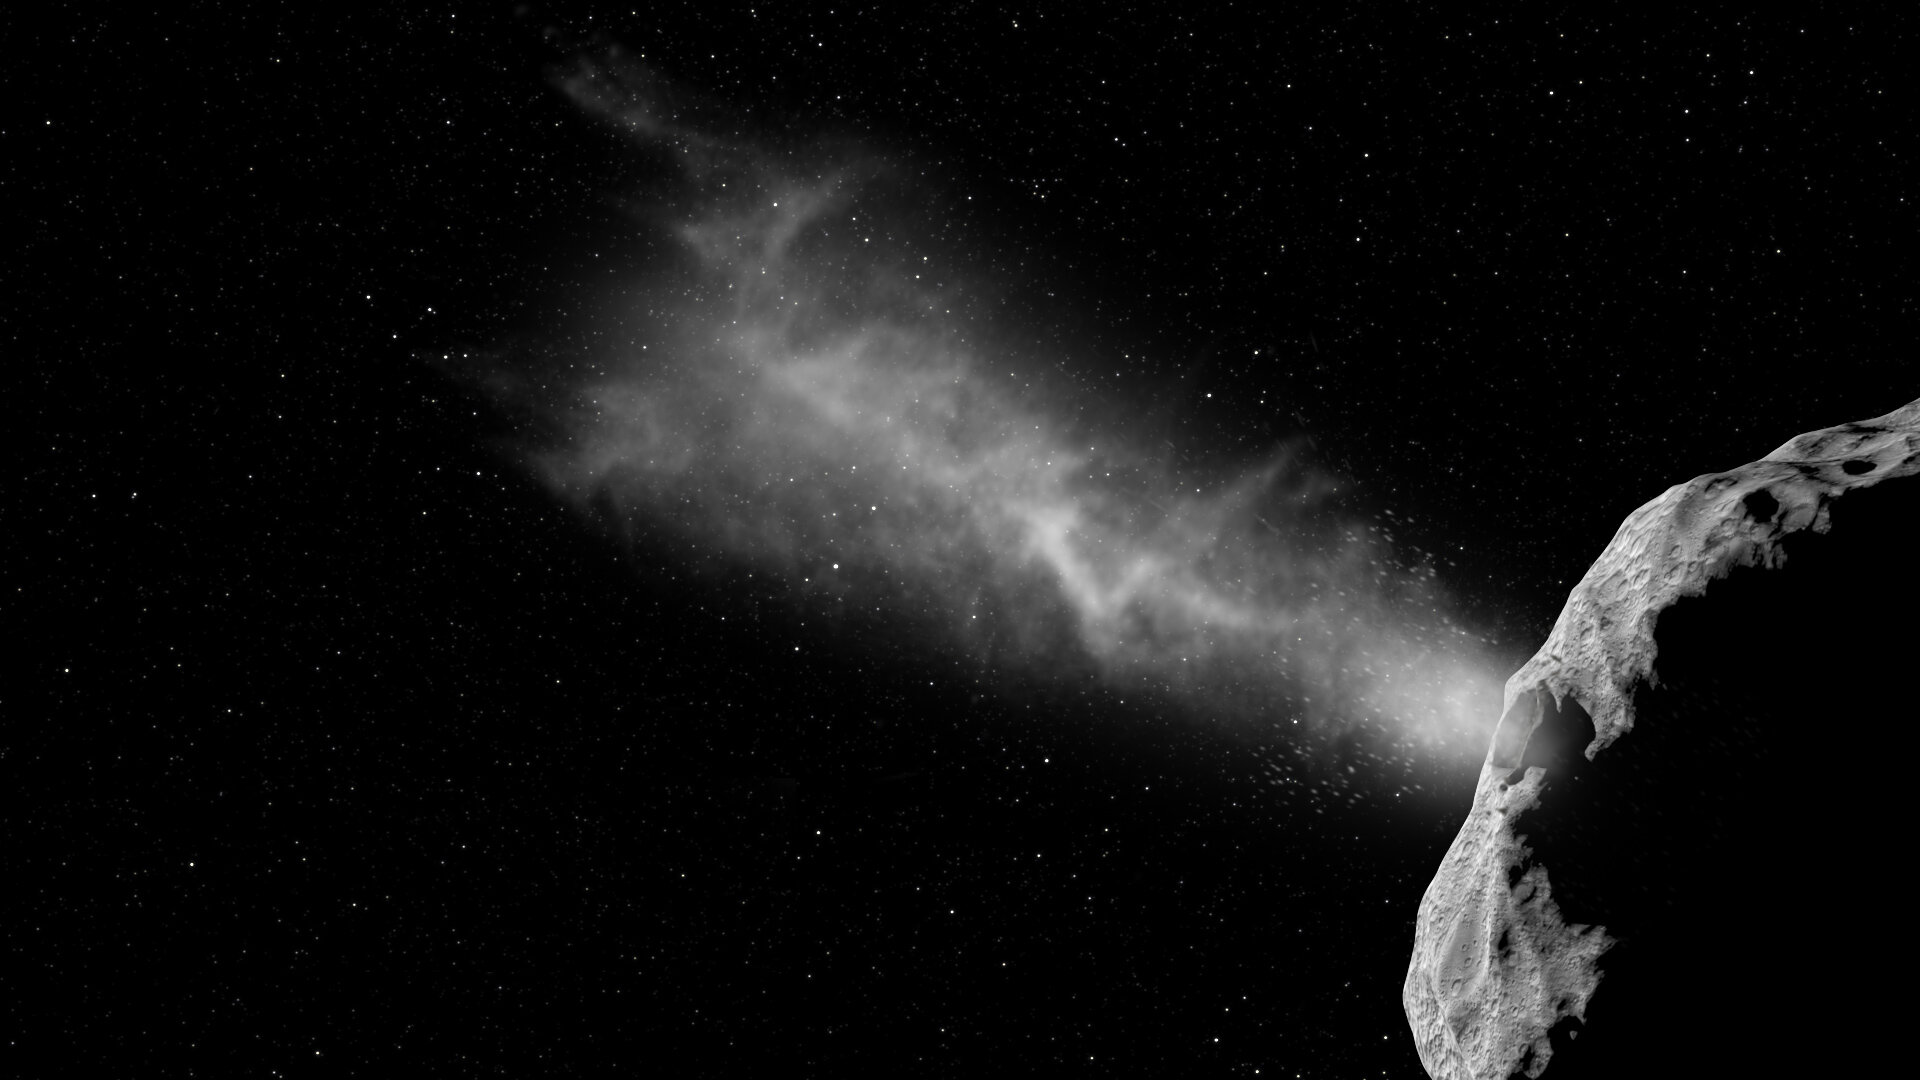 Asteroid collision